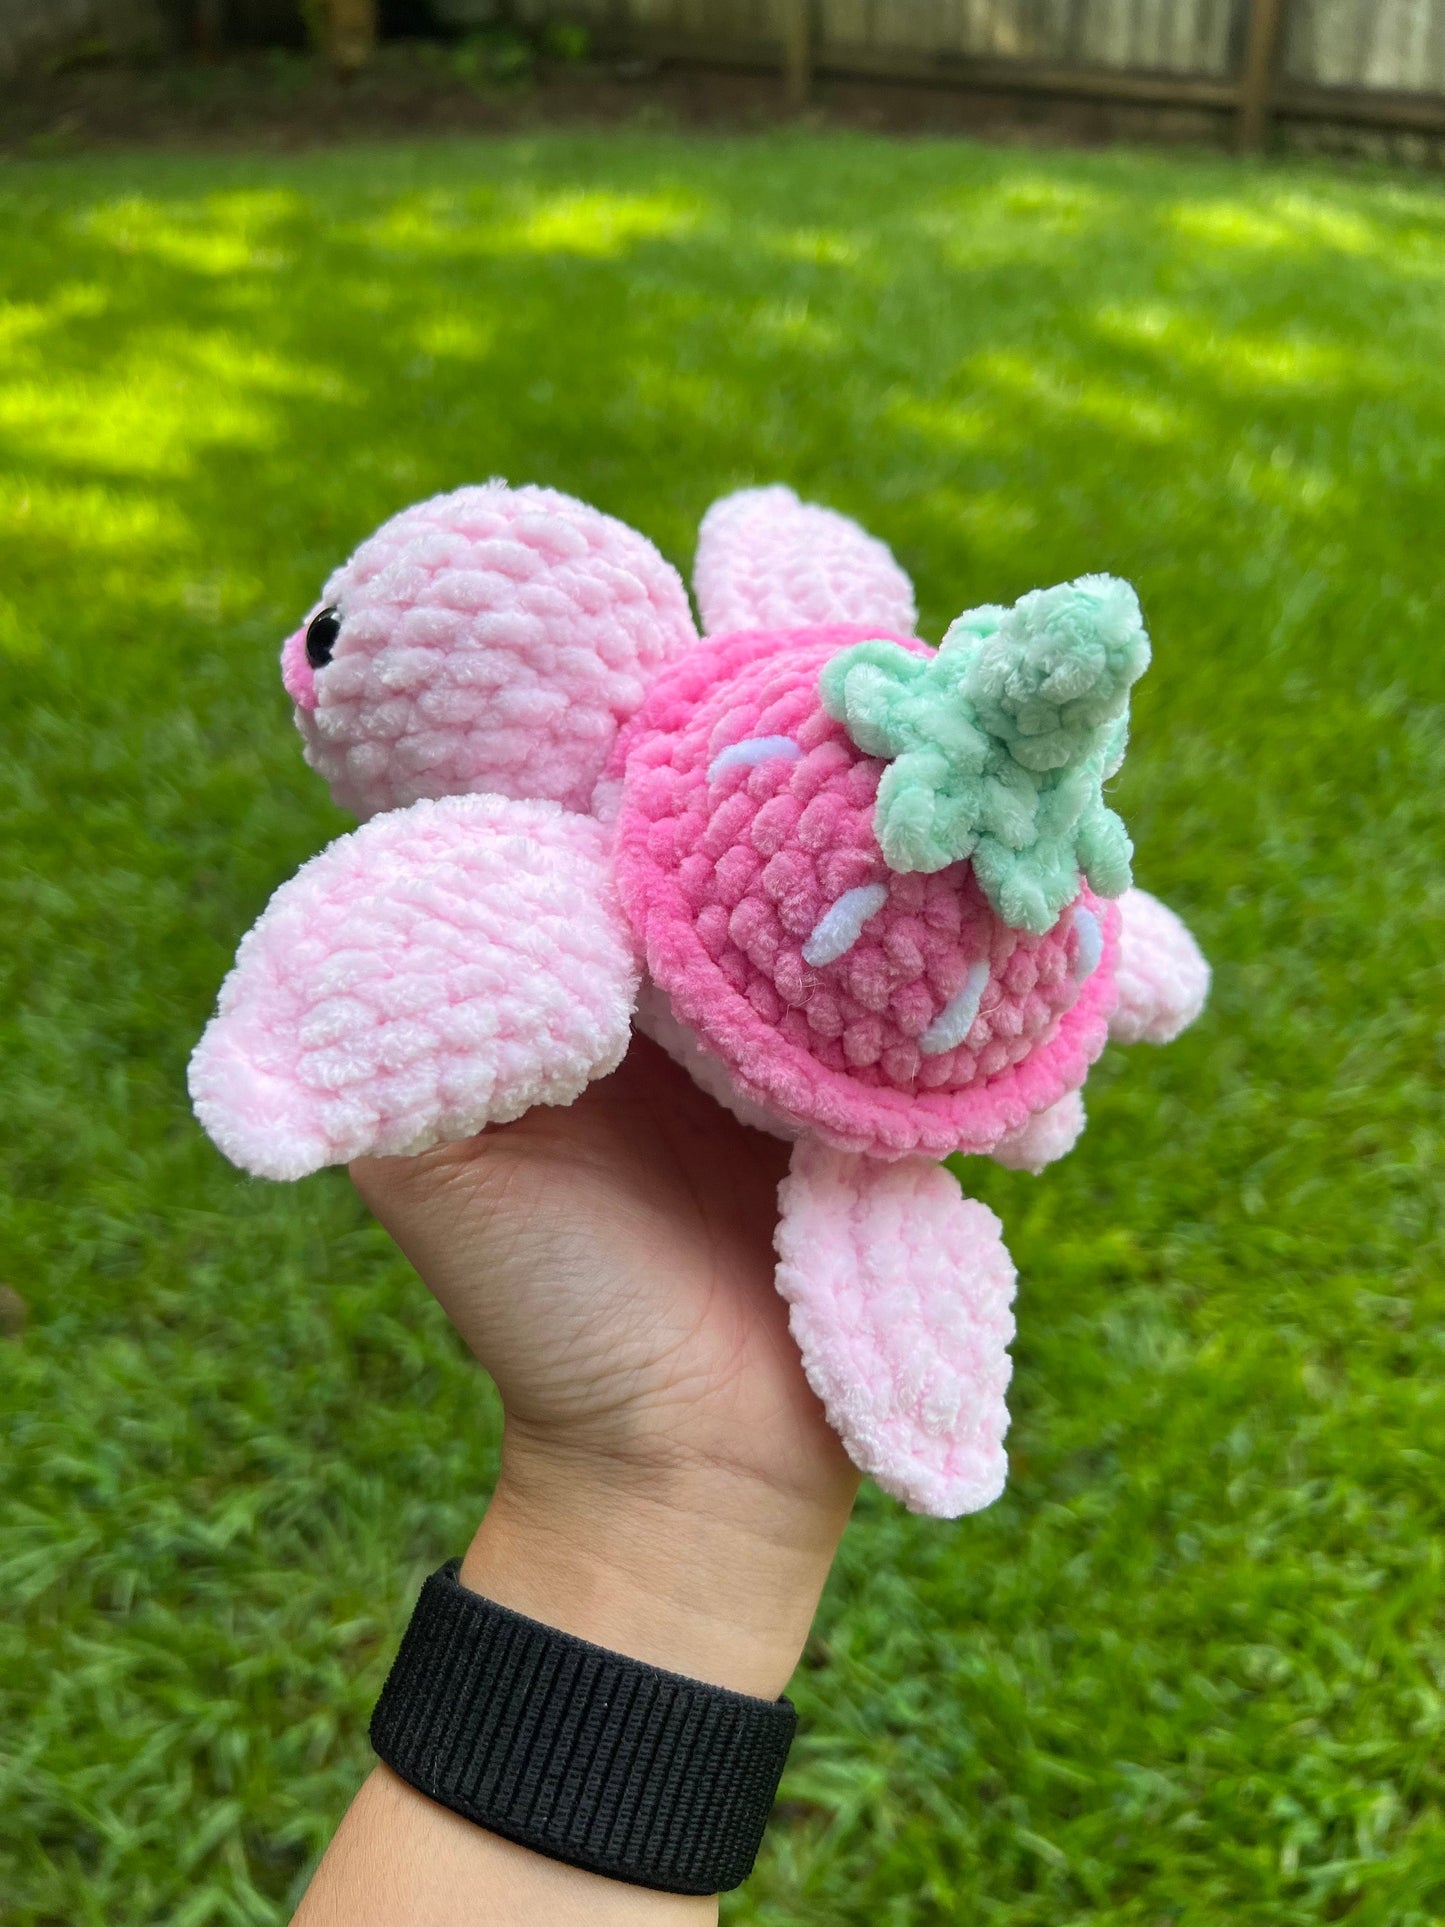 Mini Strawberry Turtle Crochet Pattern